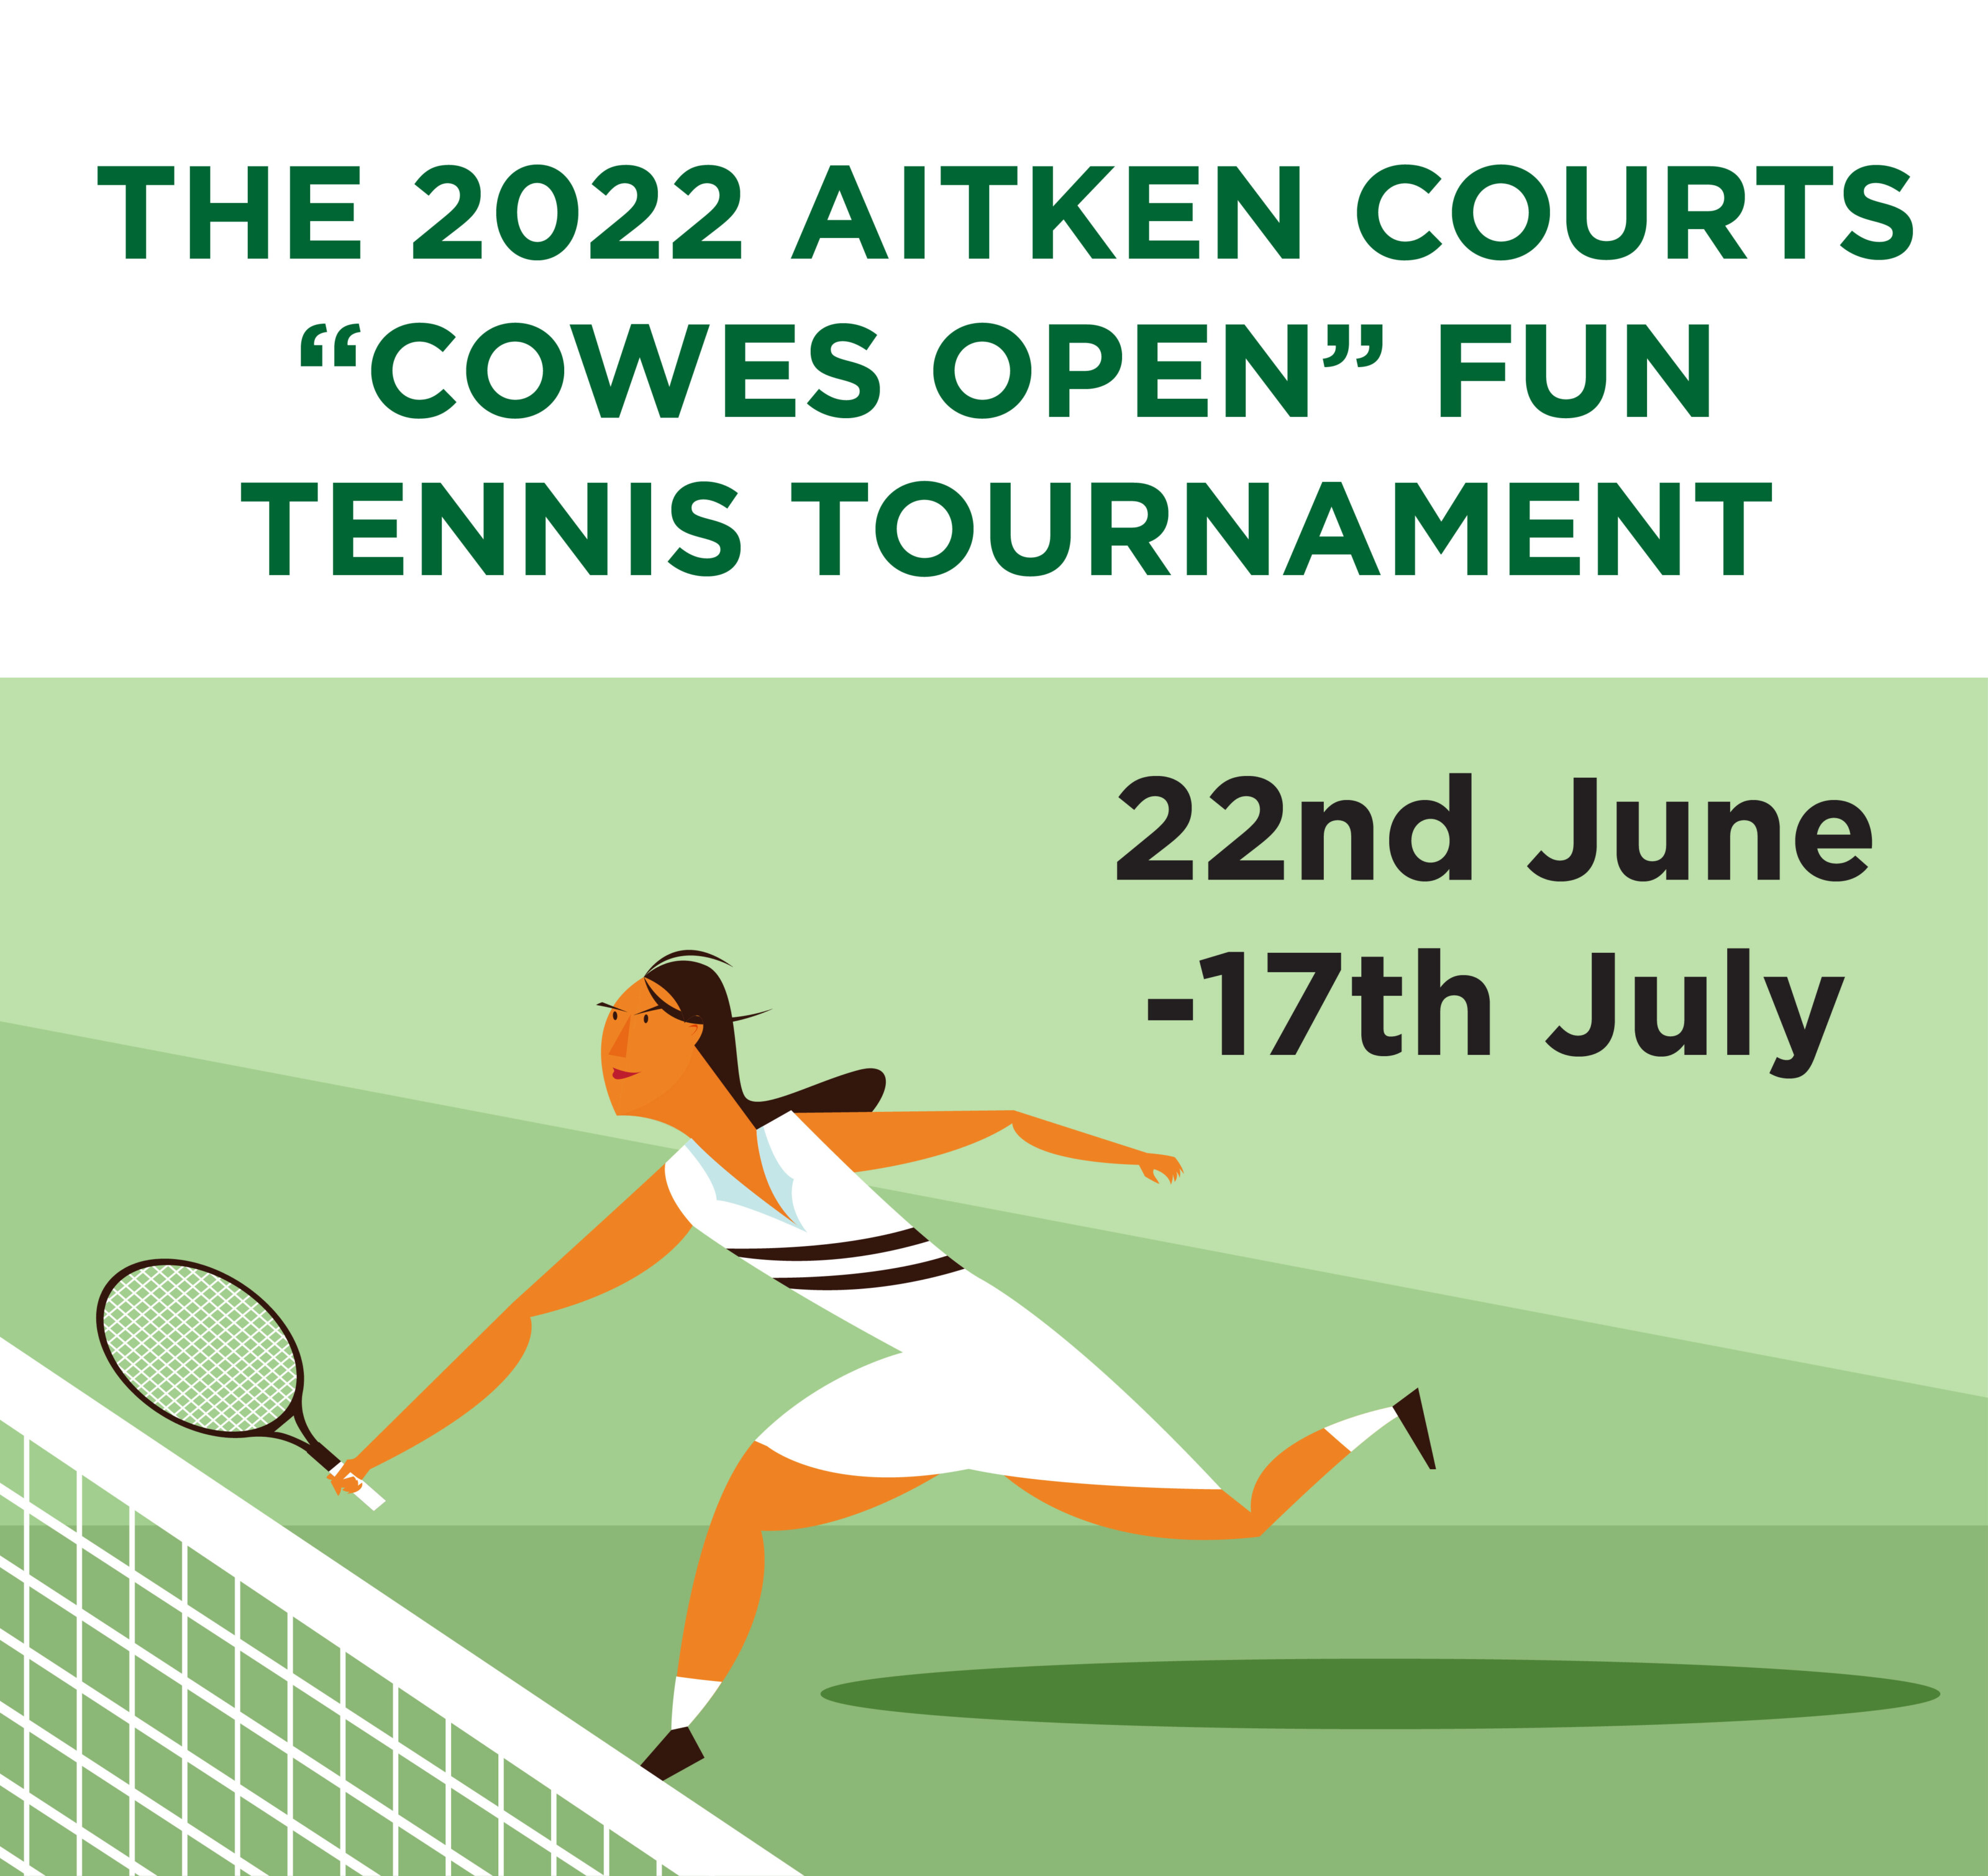 The 2022 Aitken Courts “Cowes Open” Fun Tennis Tournament